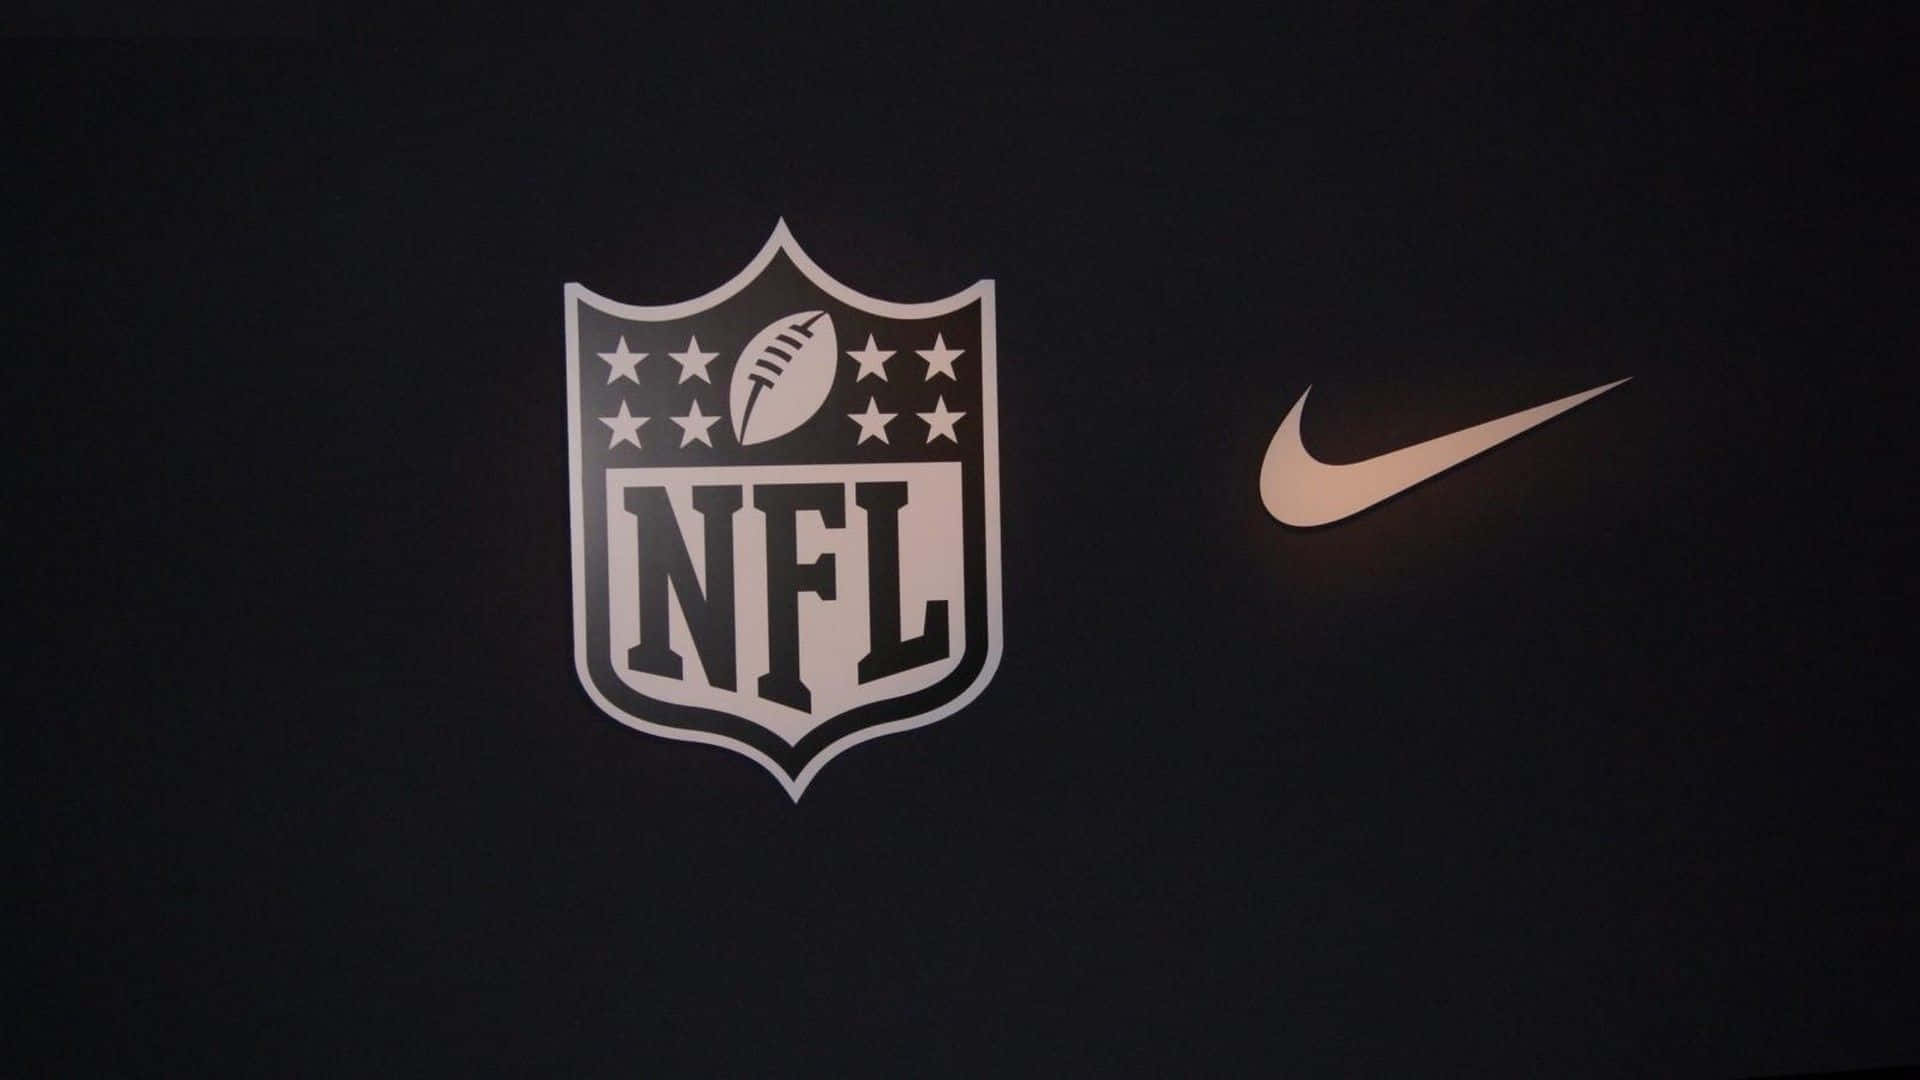 Nike Logos On A Black Background Wallpaper